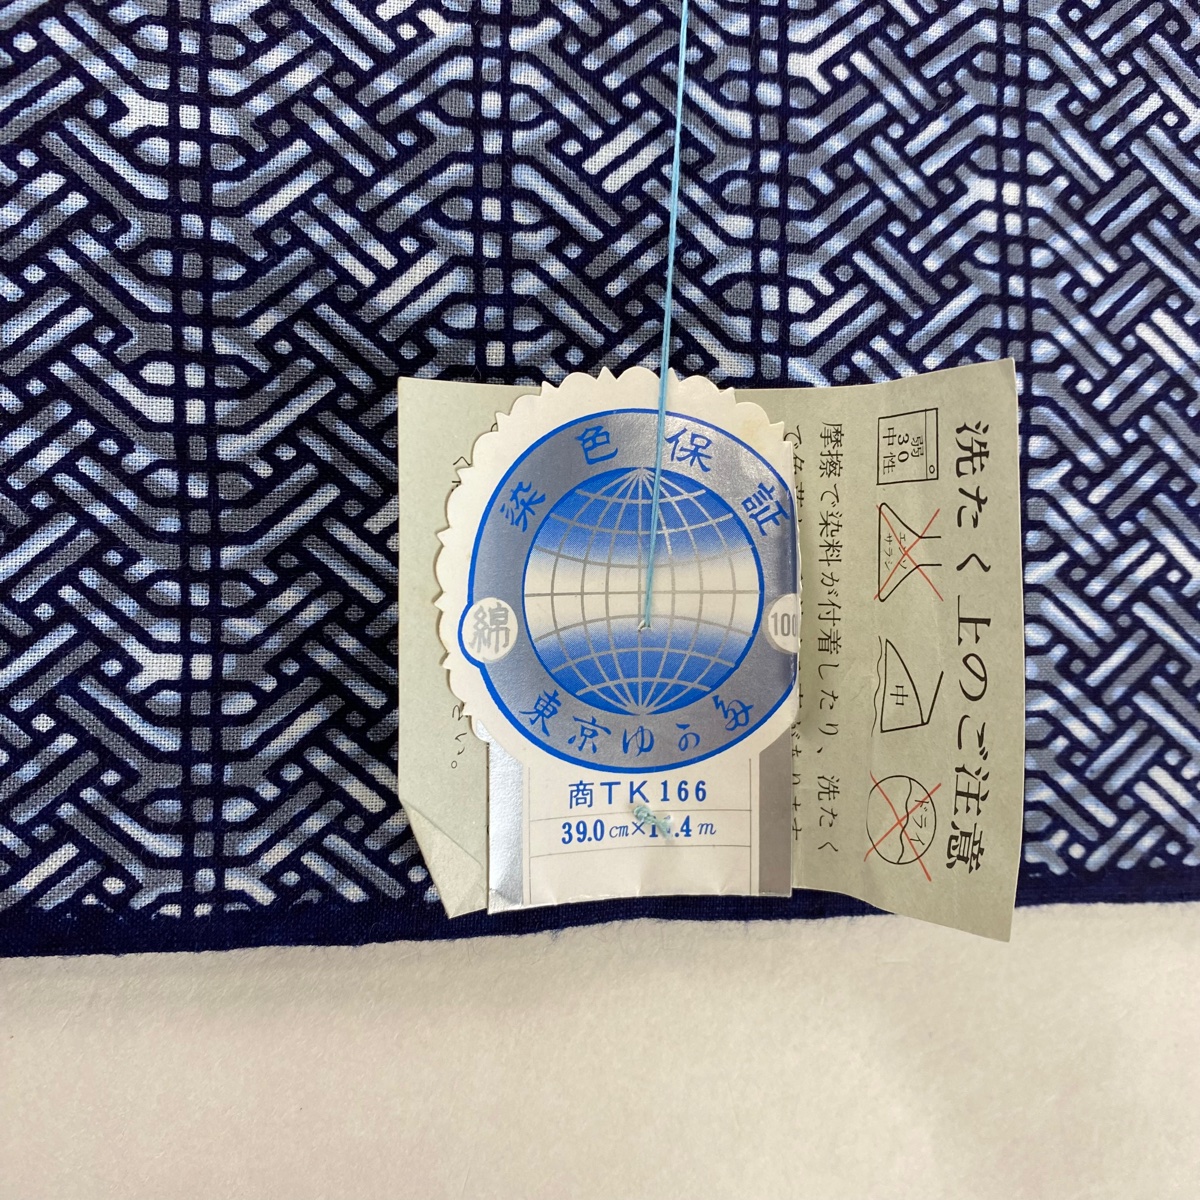  ткань super товар мужчина кимоно юката геометрический рисунок синий серый хлопок б/у 